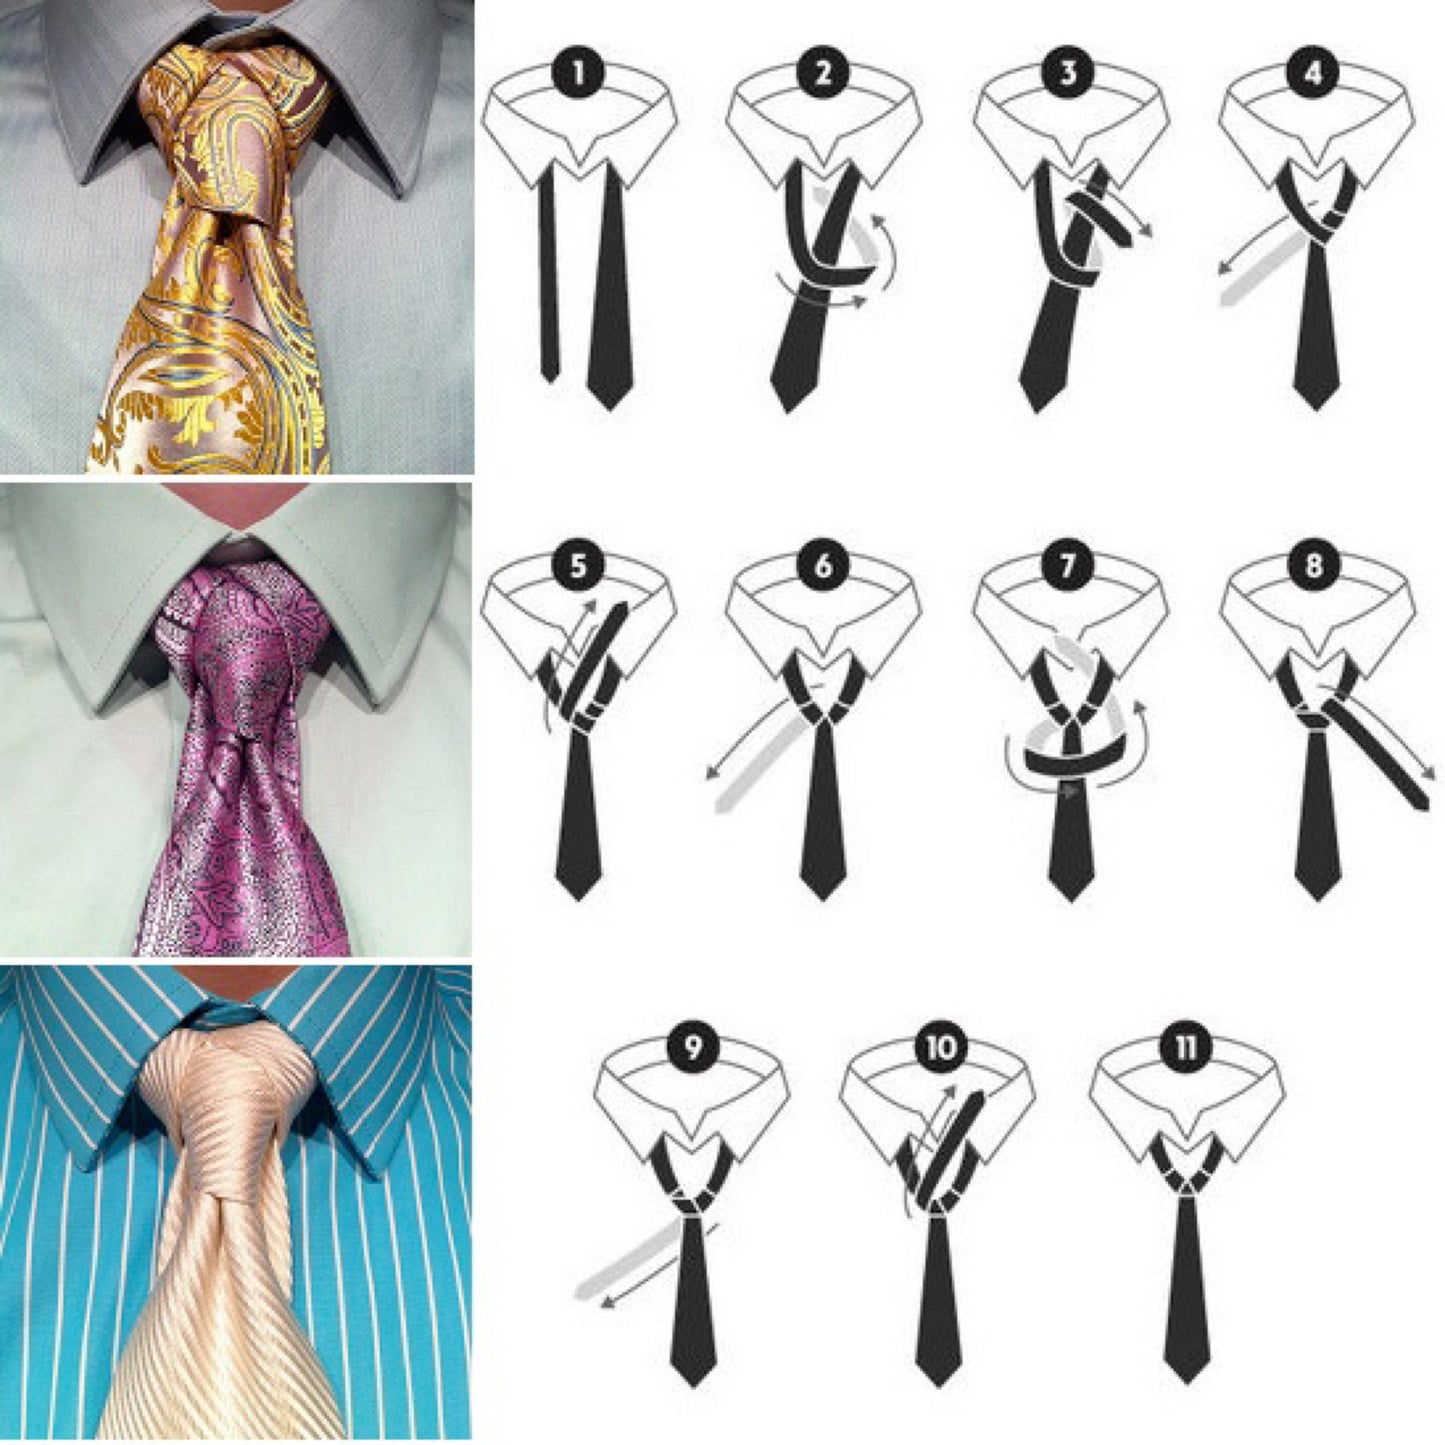 Men’s Silk Coordinated Tie Set - Orange Black Stri[pe